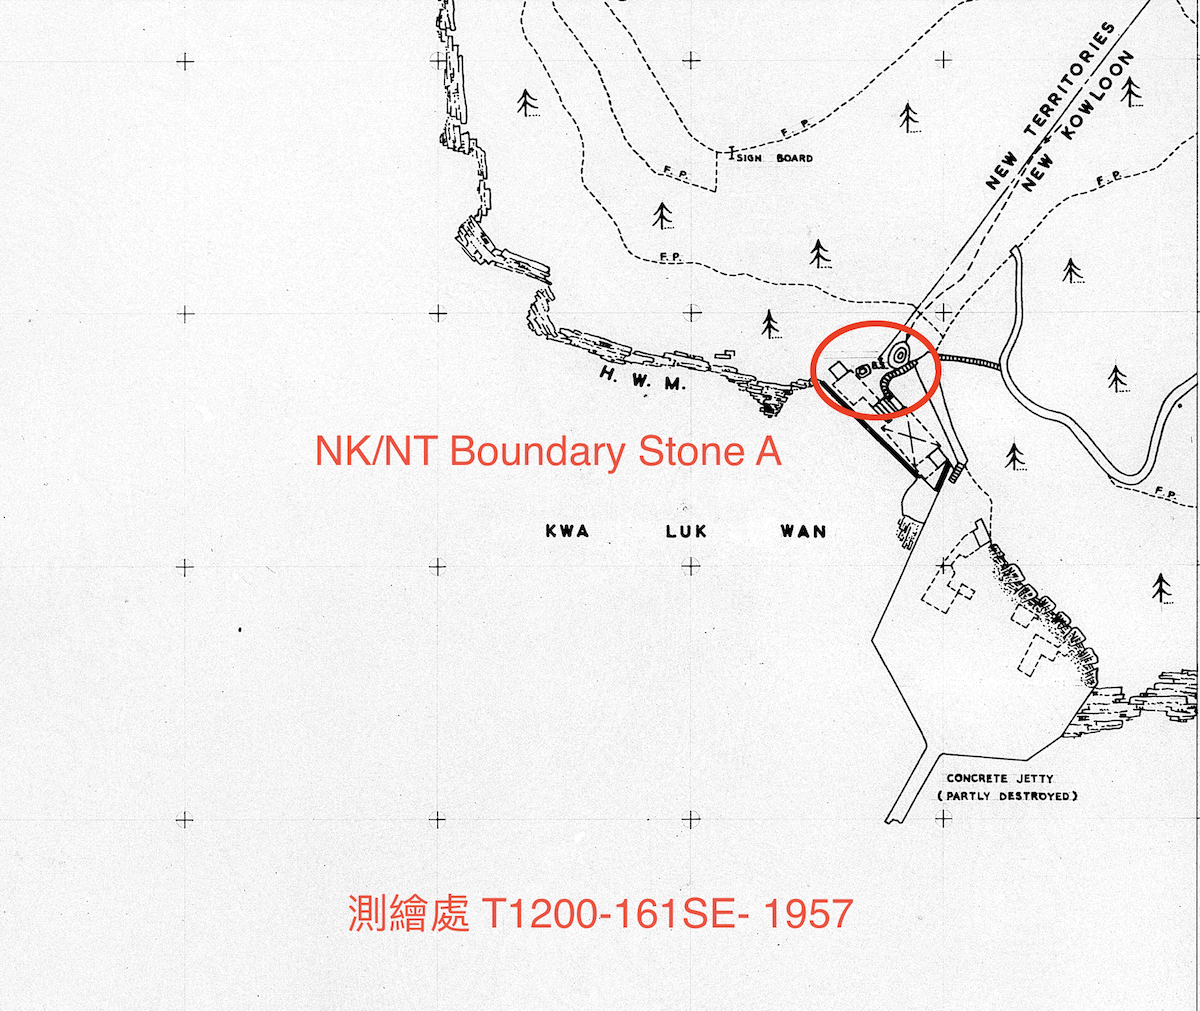 A點在N.K.M.L. No. 1 地段西南端點界石上，該地段屬於皇家海軍「魚雷訓練場」地段。（香港行跡提供）